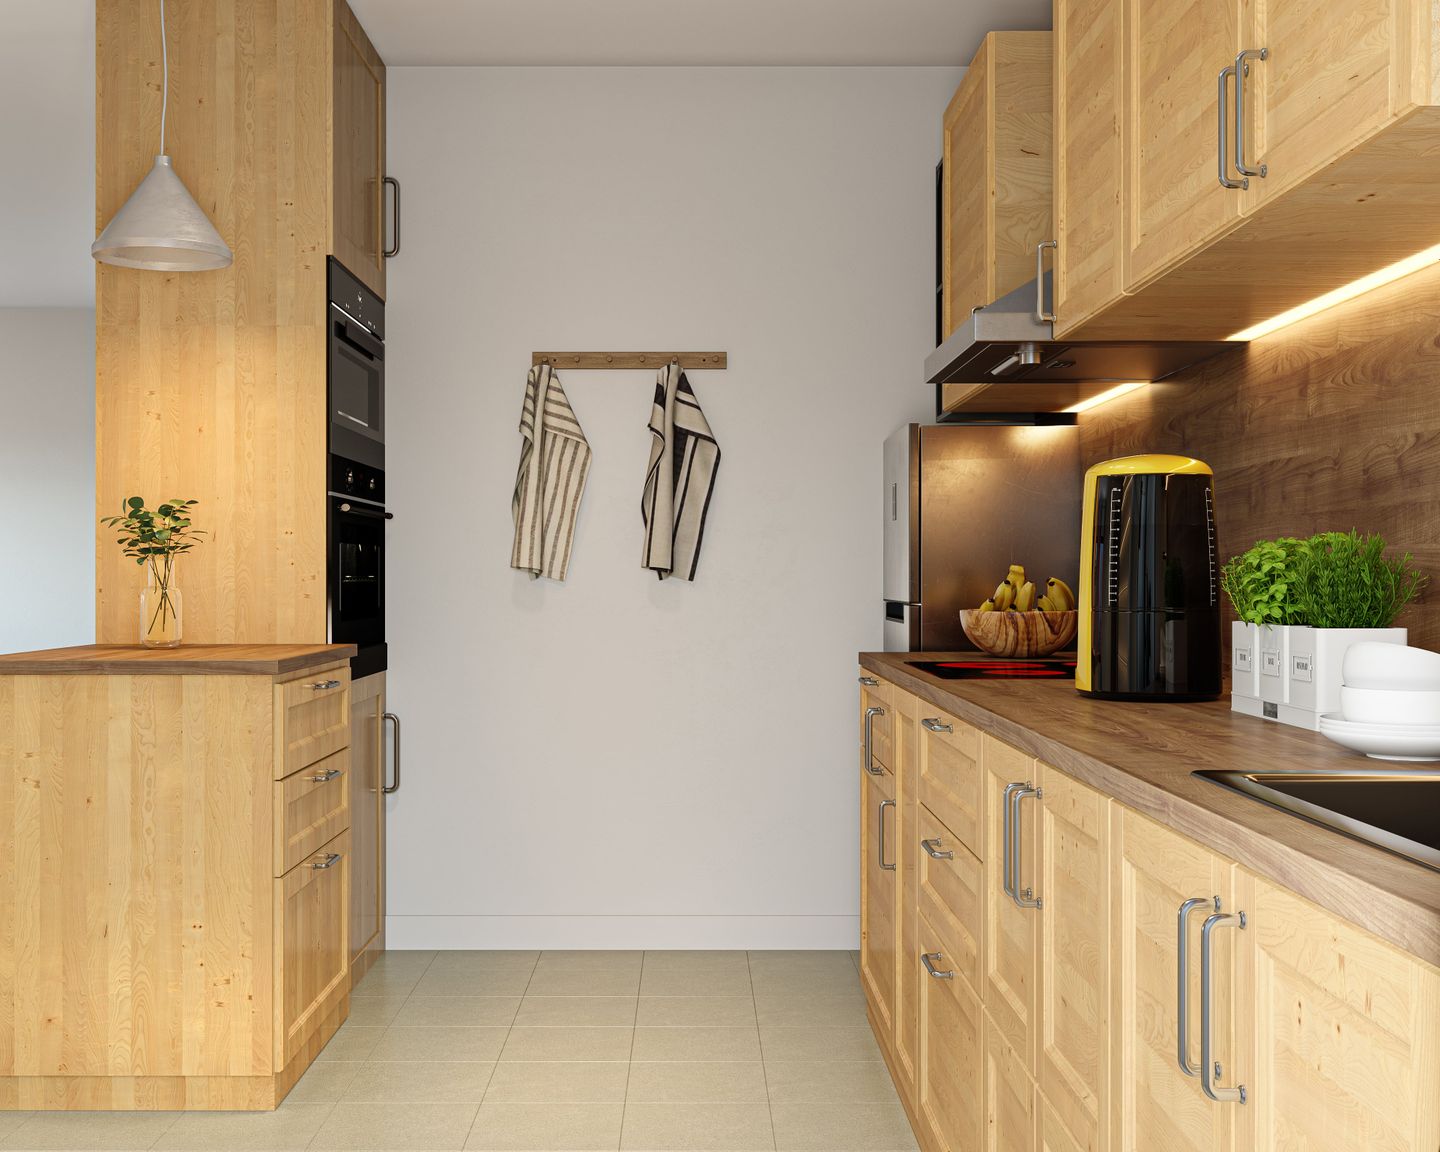 Classic Parallel Kitchen Design With Wood Grain Laminates - Livspace